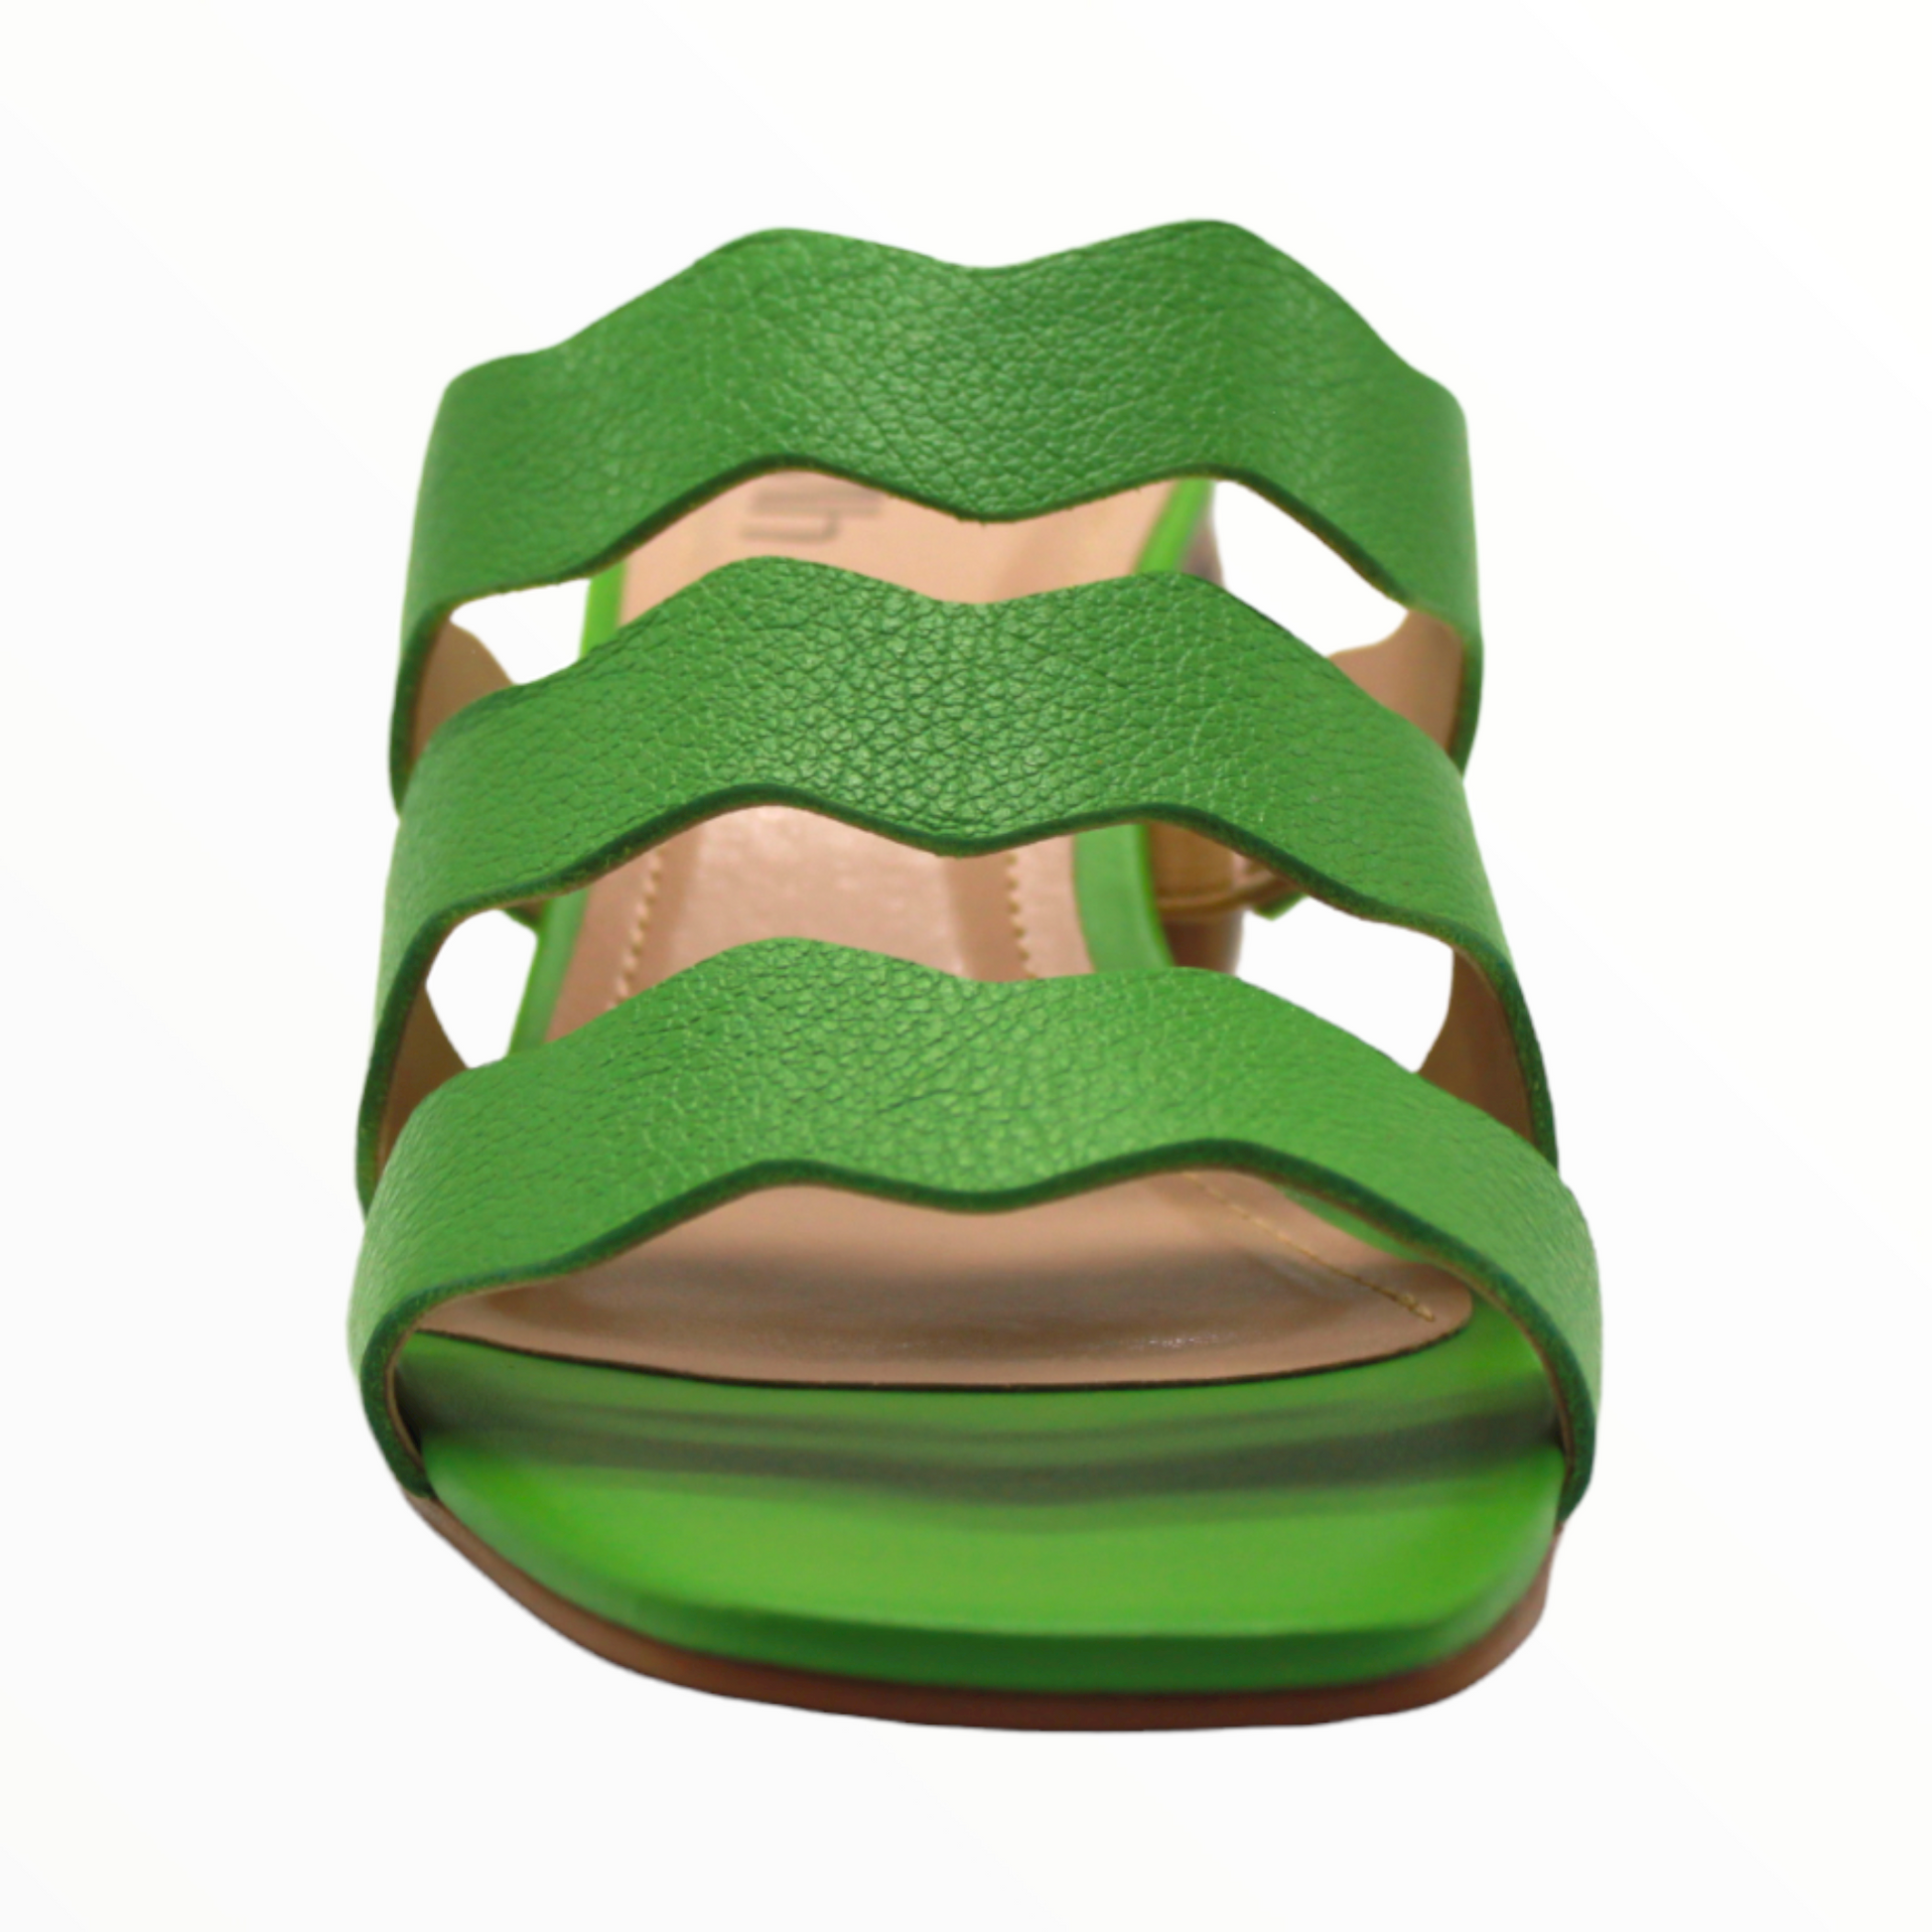 Green Leather Block Heeled Sandals - Julia & Santos 